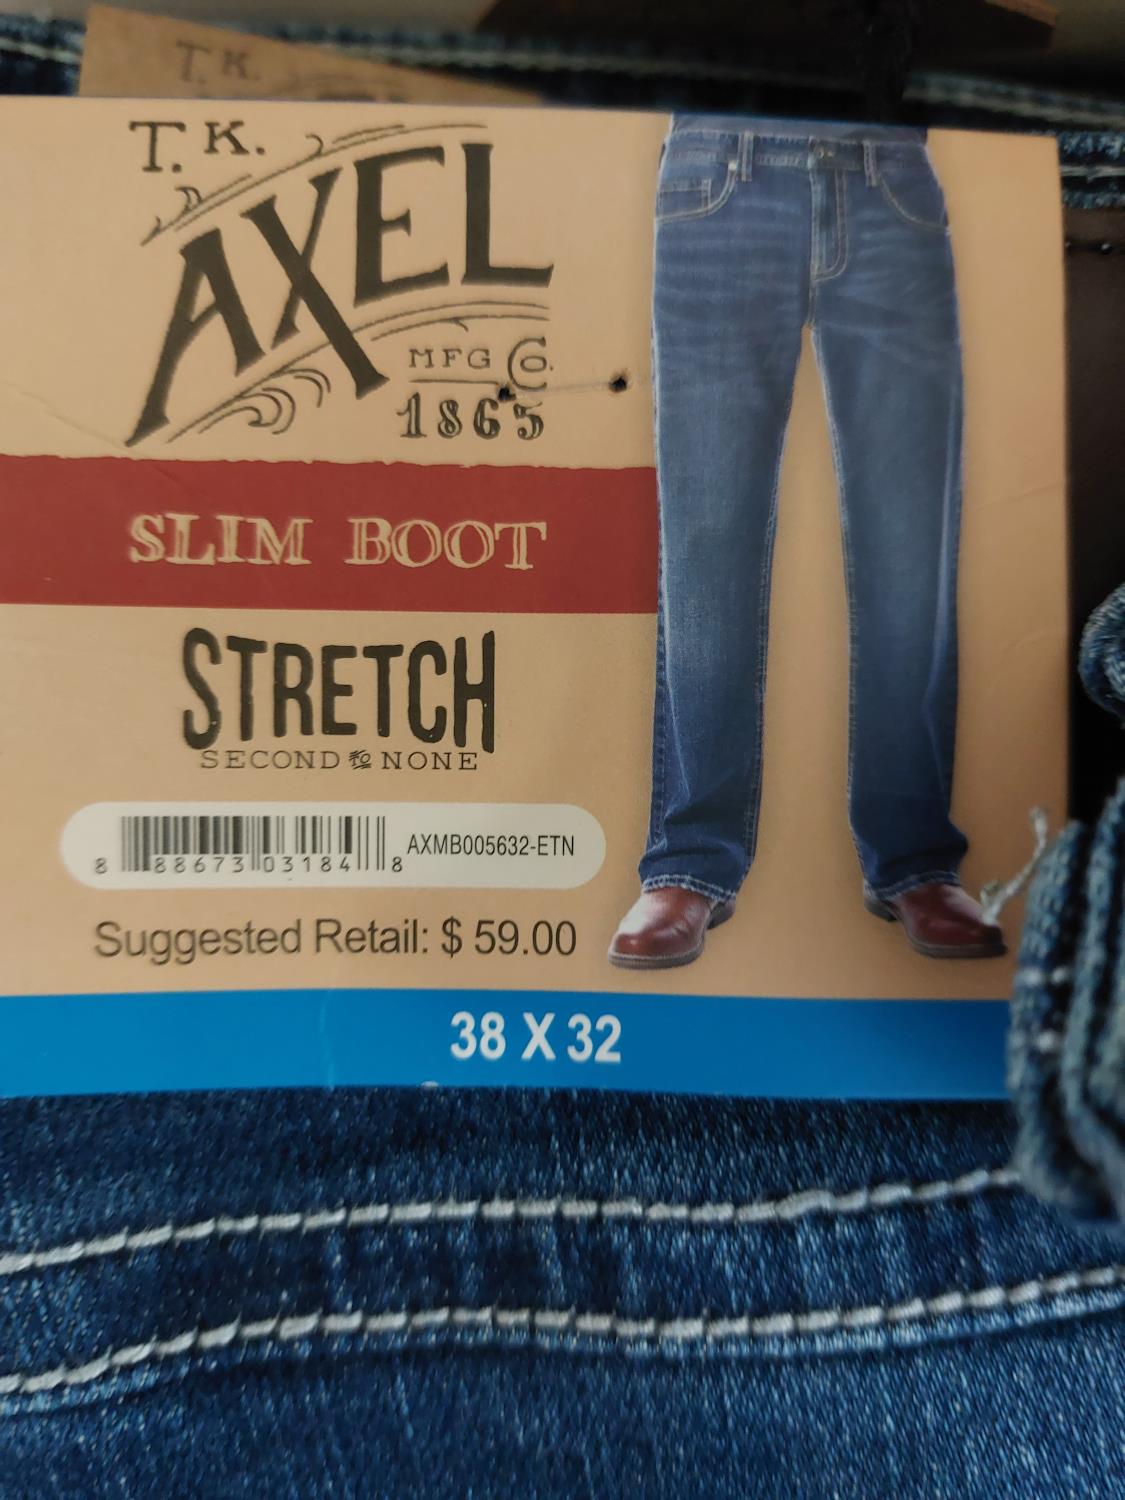 TK Axel Men's Slim Boot Stretch Jeans Medium Wash Eaton Denim